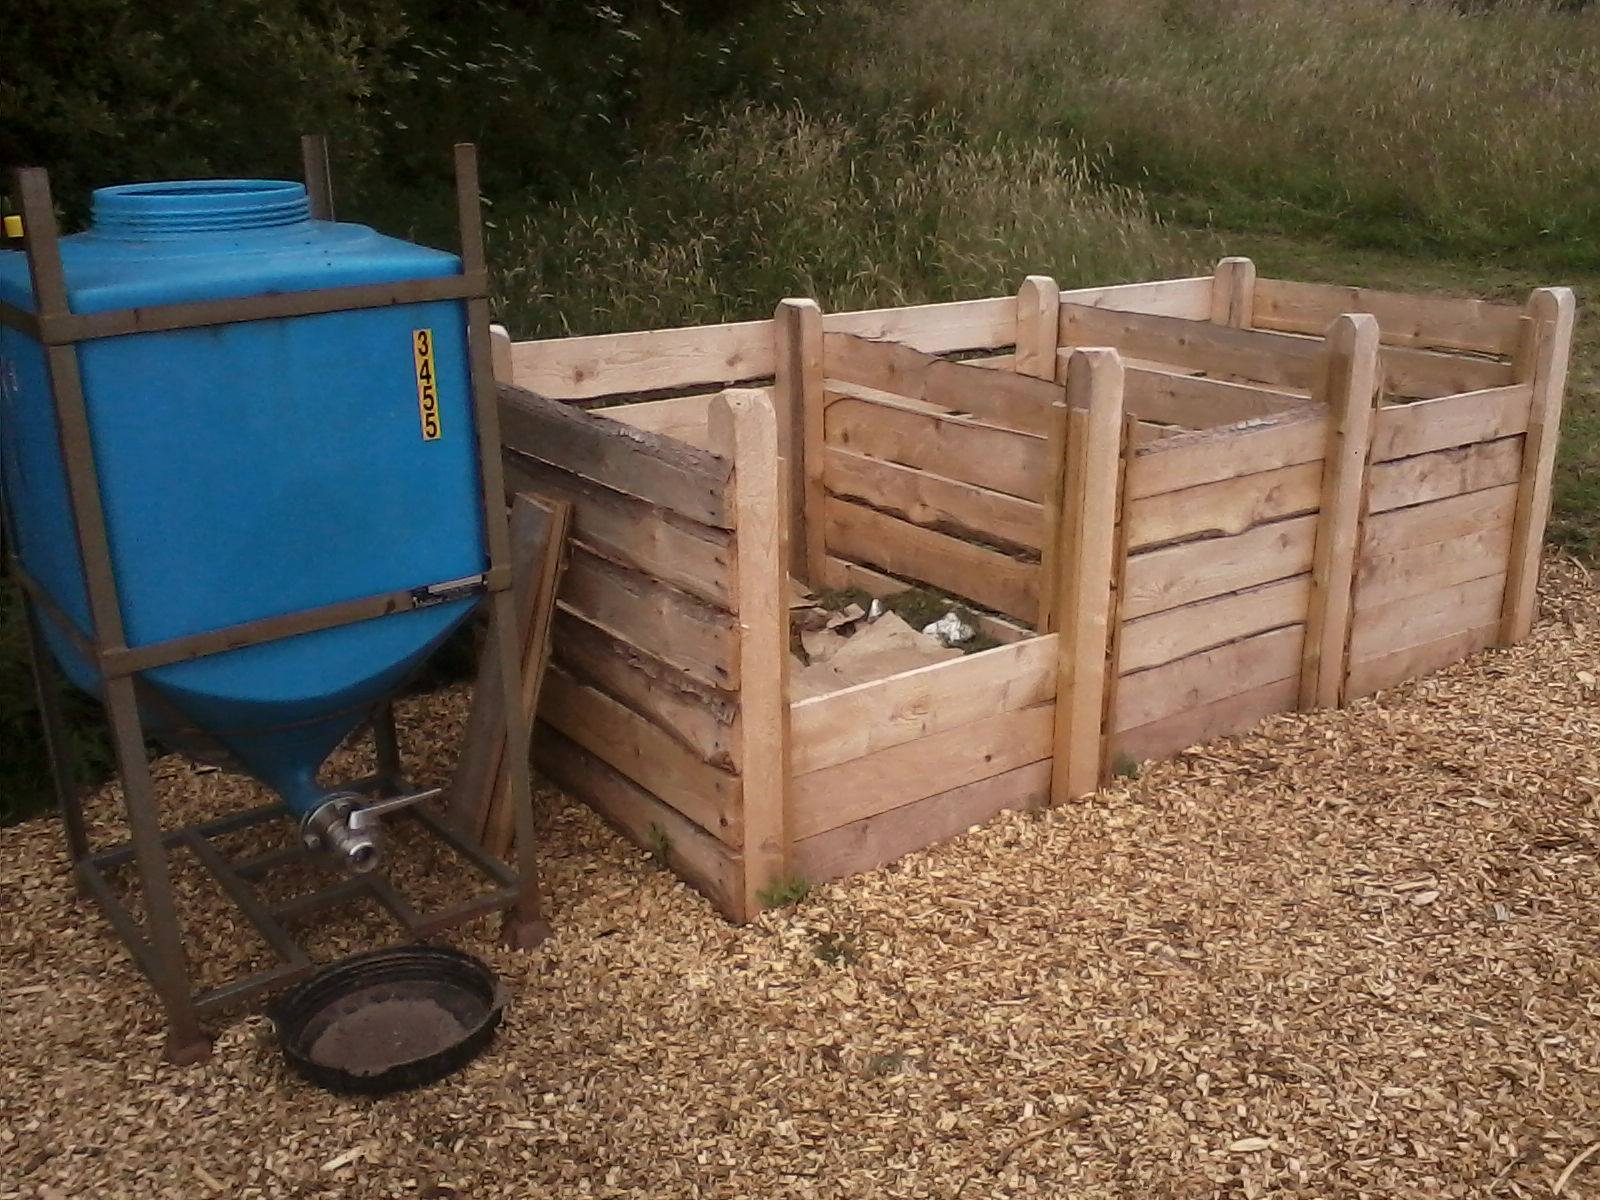 Three wooden compost bins